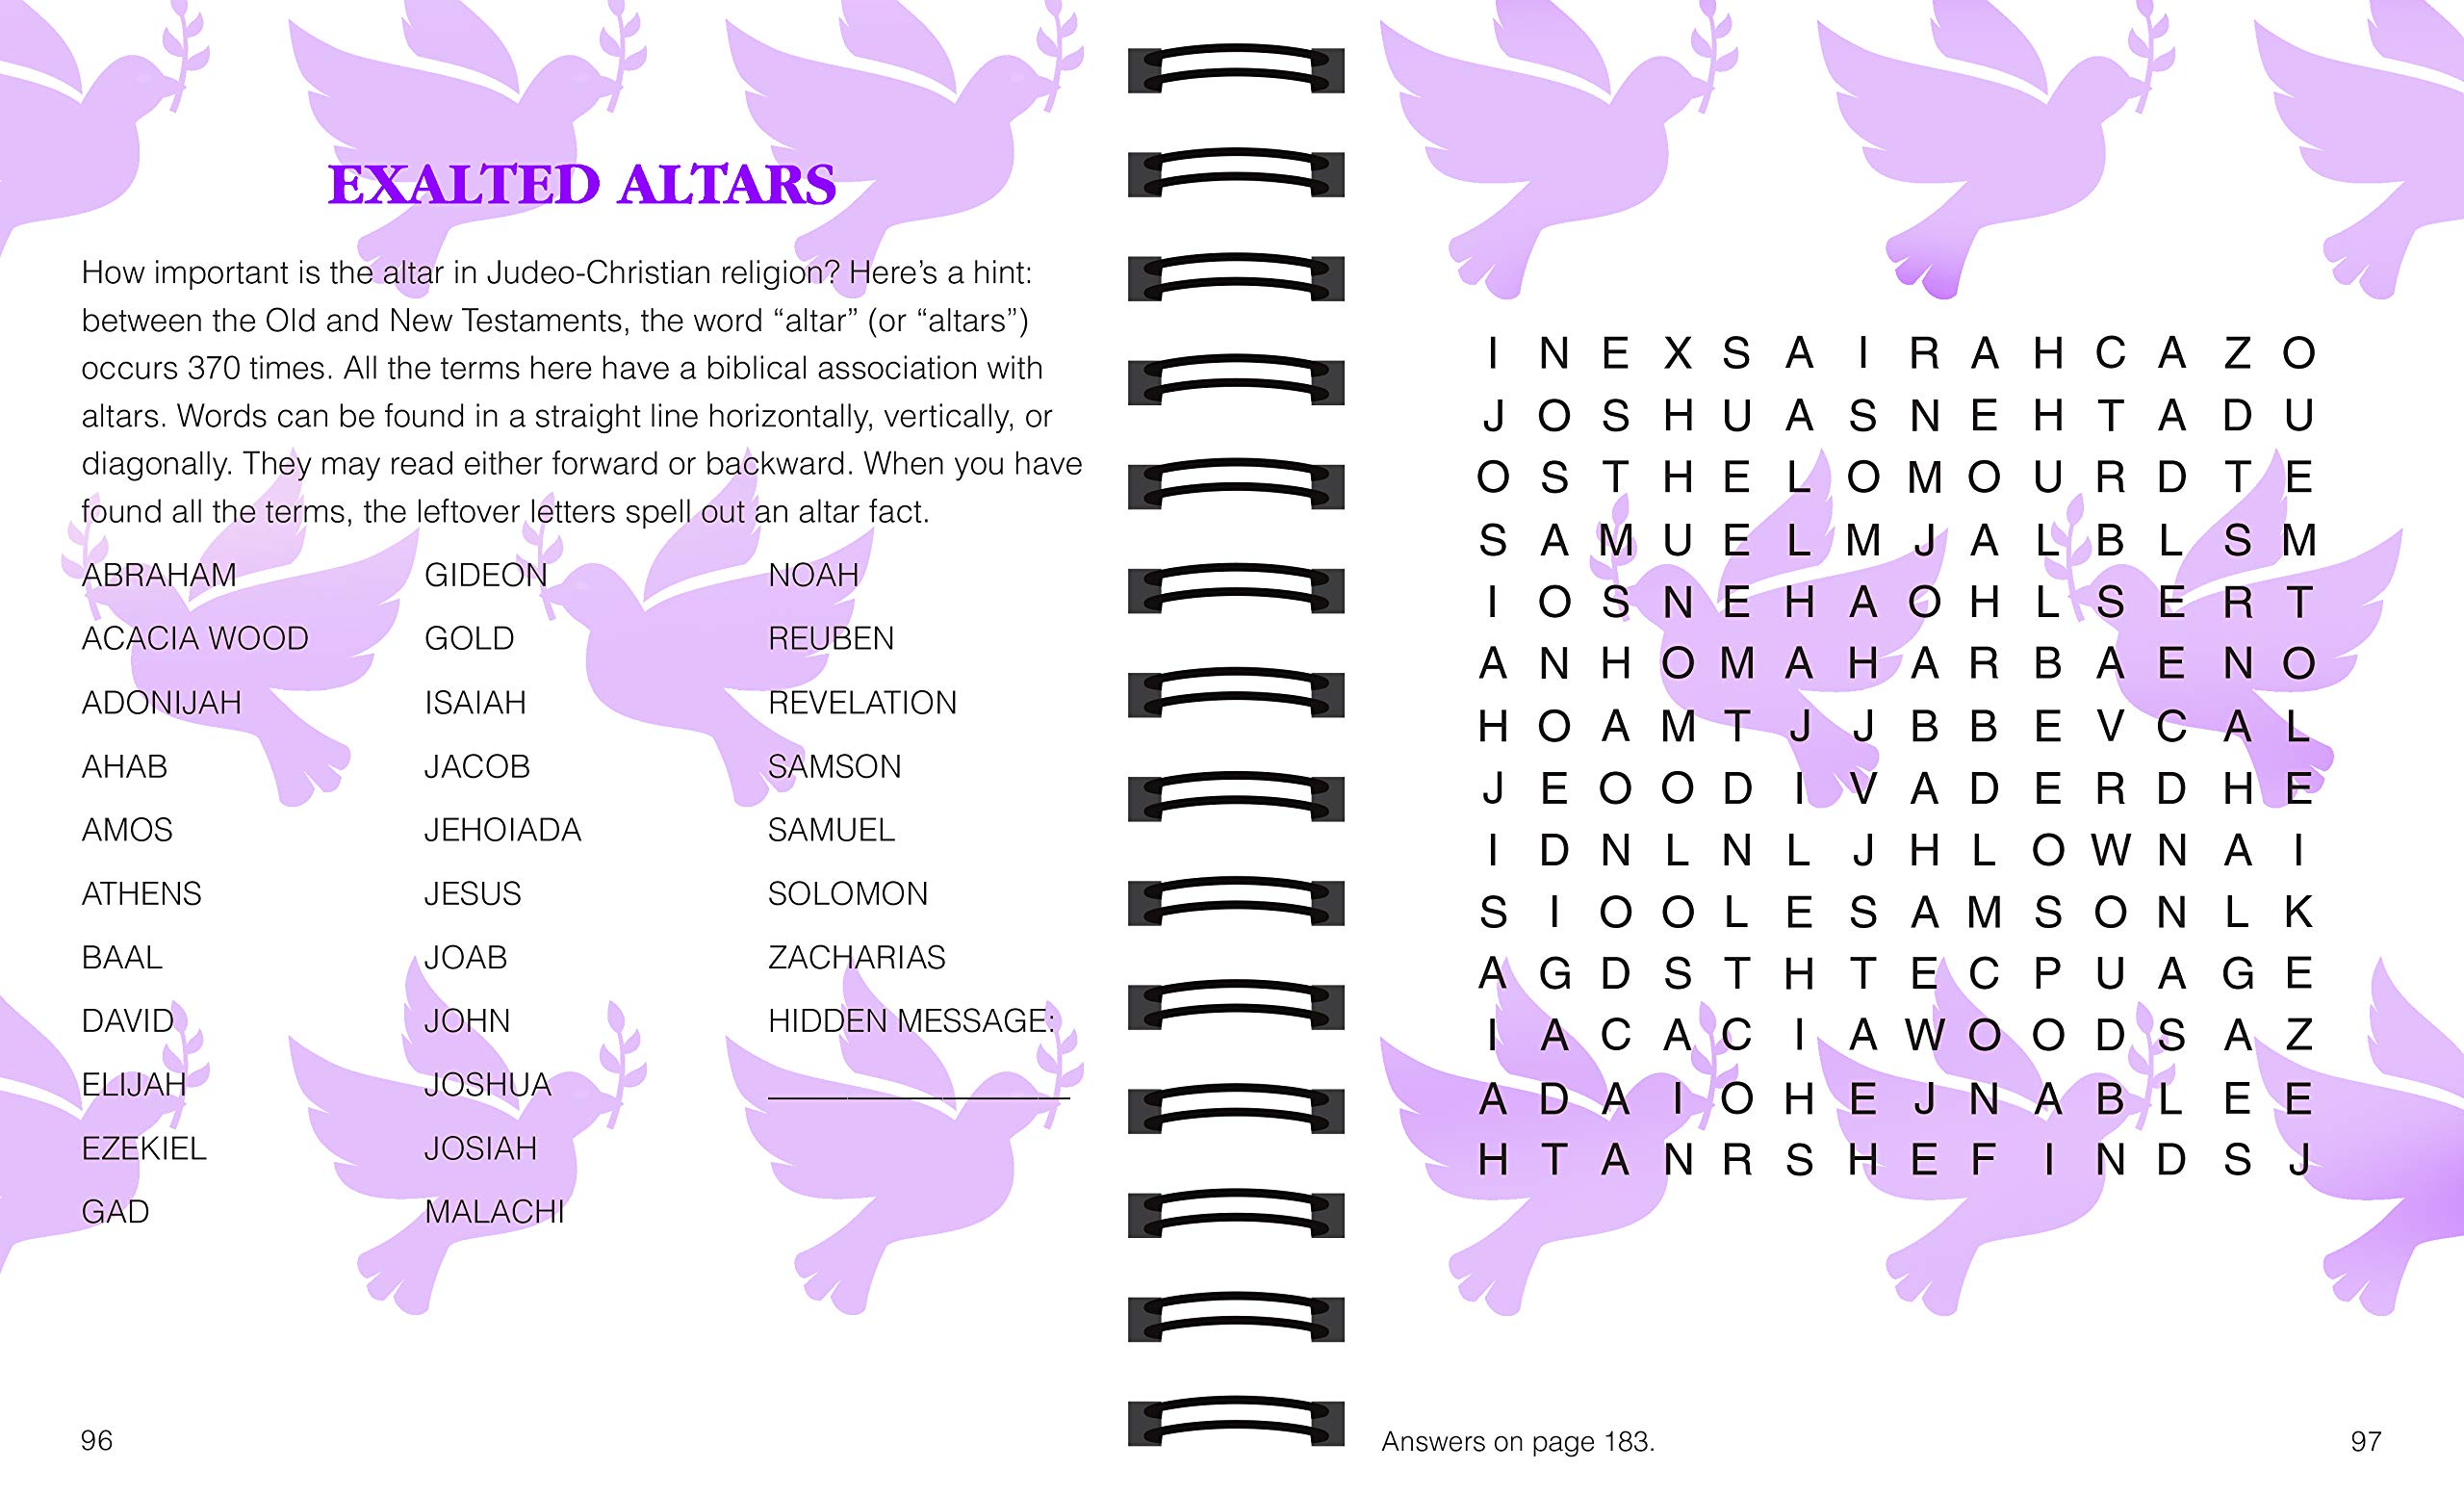 Brain Games - Large Print Bible Word Search (Brain Games - Bible)